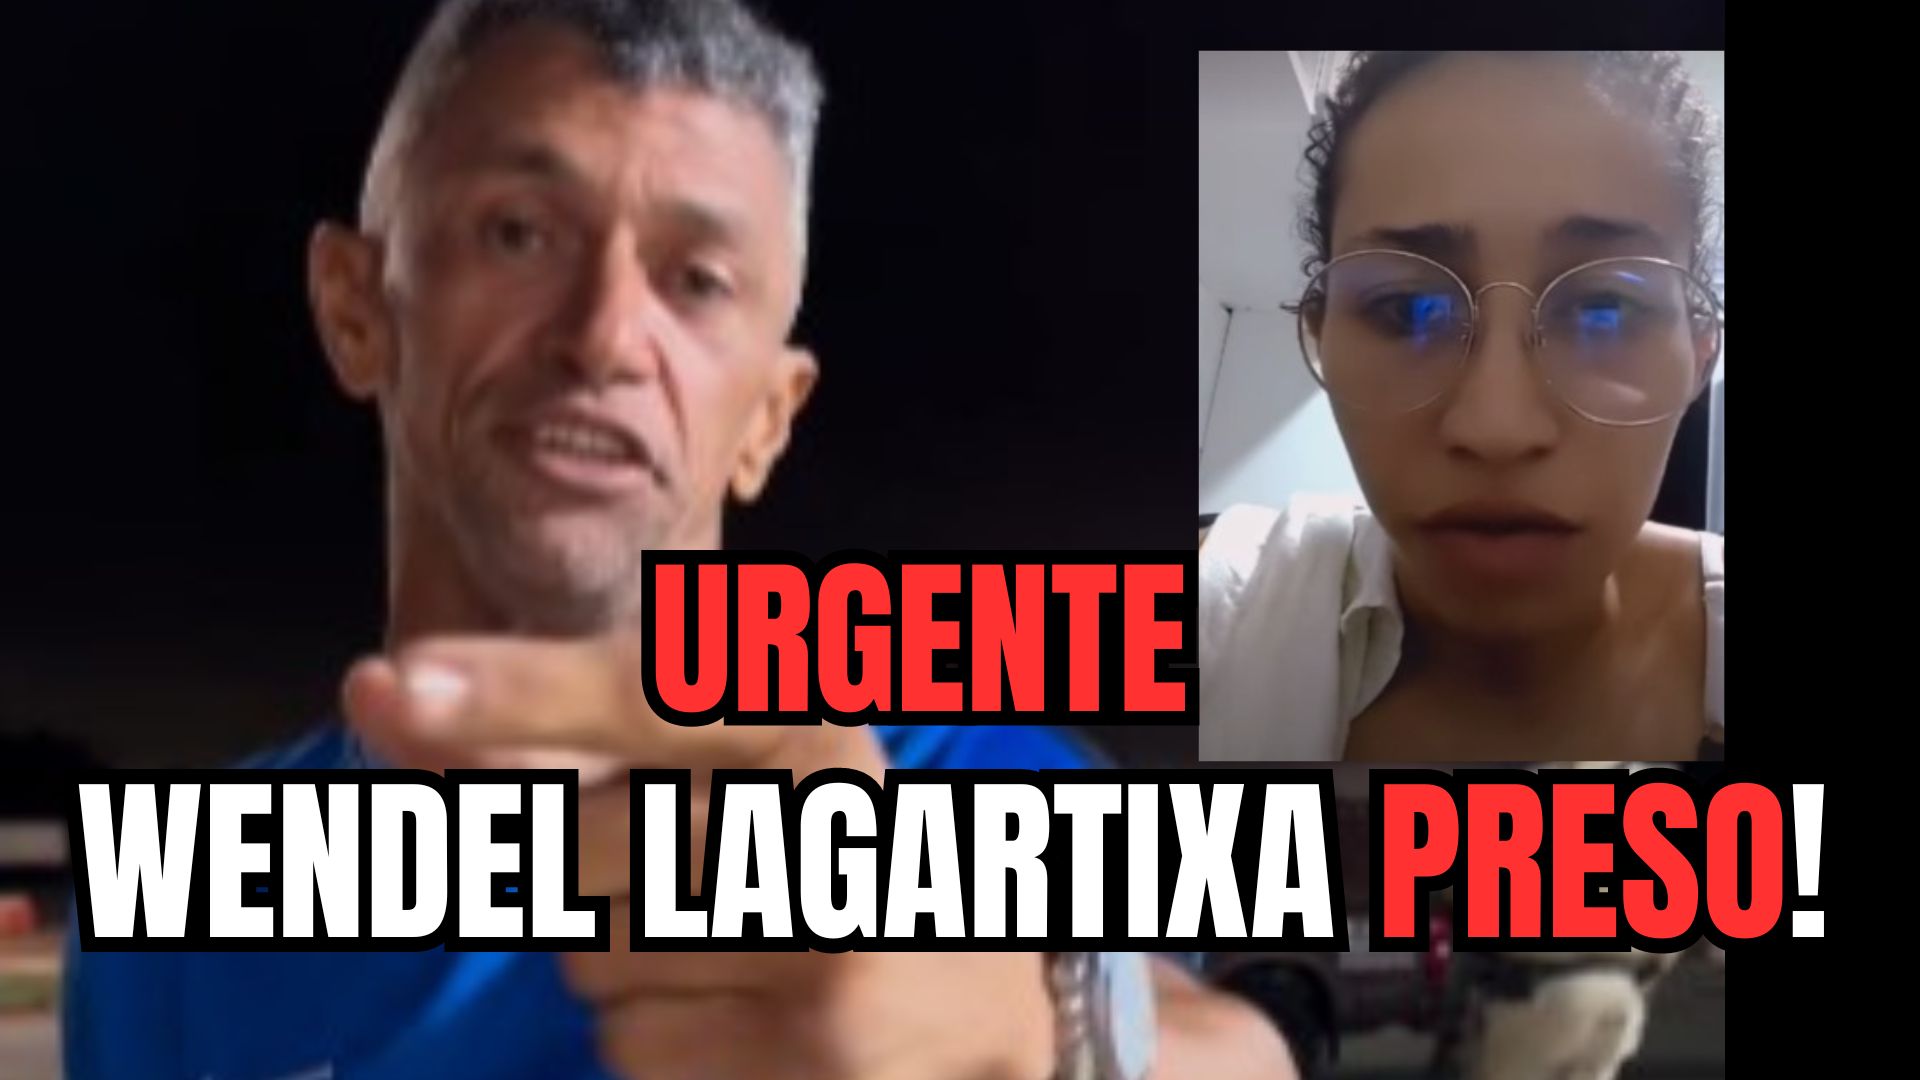 [VIDEO] Urgente: Wendel Lagartixa é preso na Bahia e encaminhado para presídio